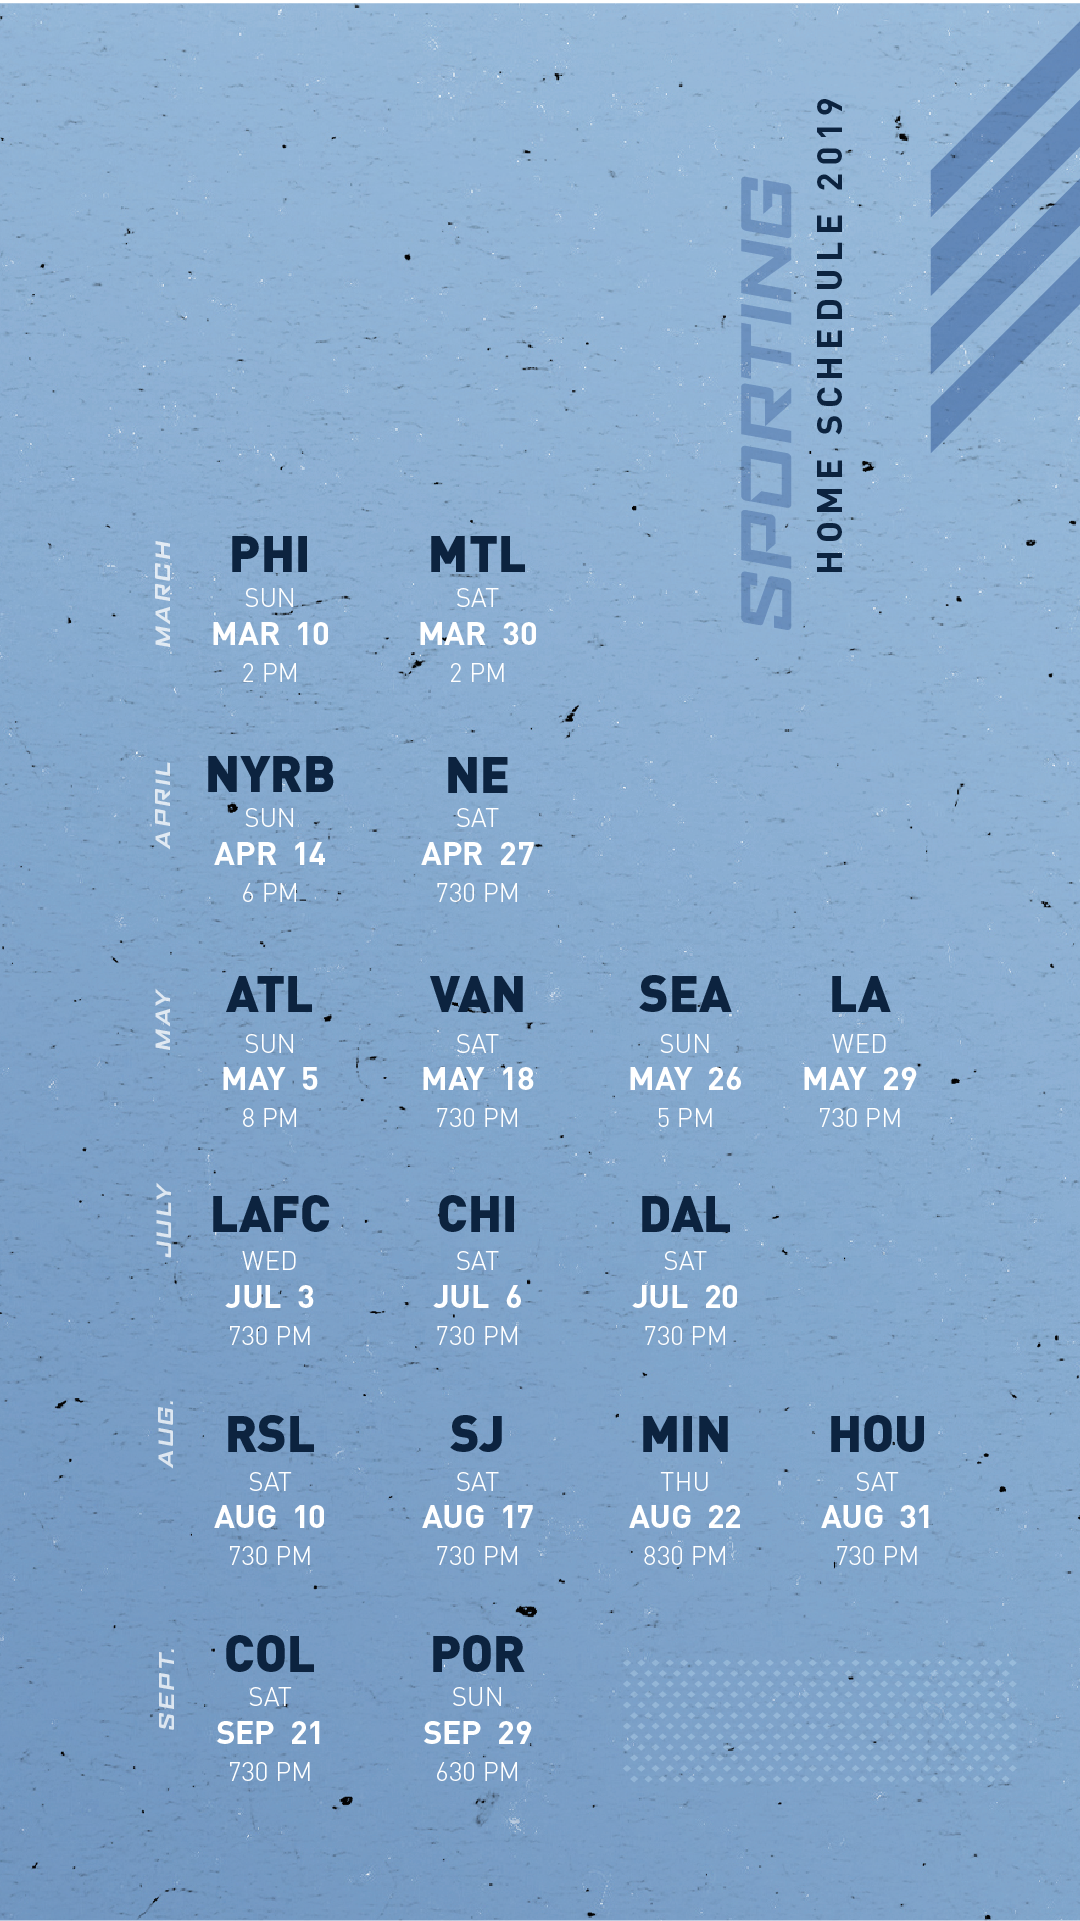 Download 2019 Schedule Sporting Kansas City